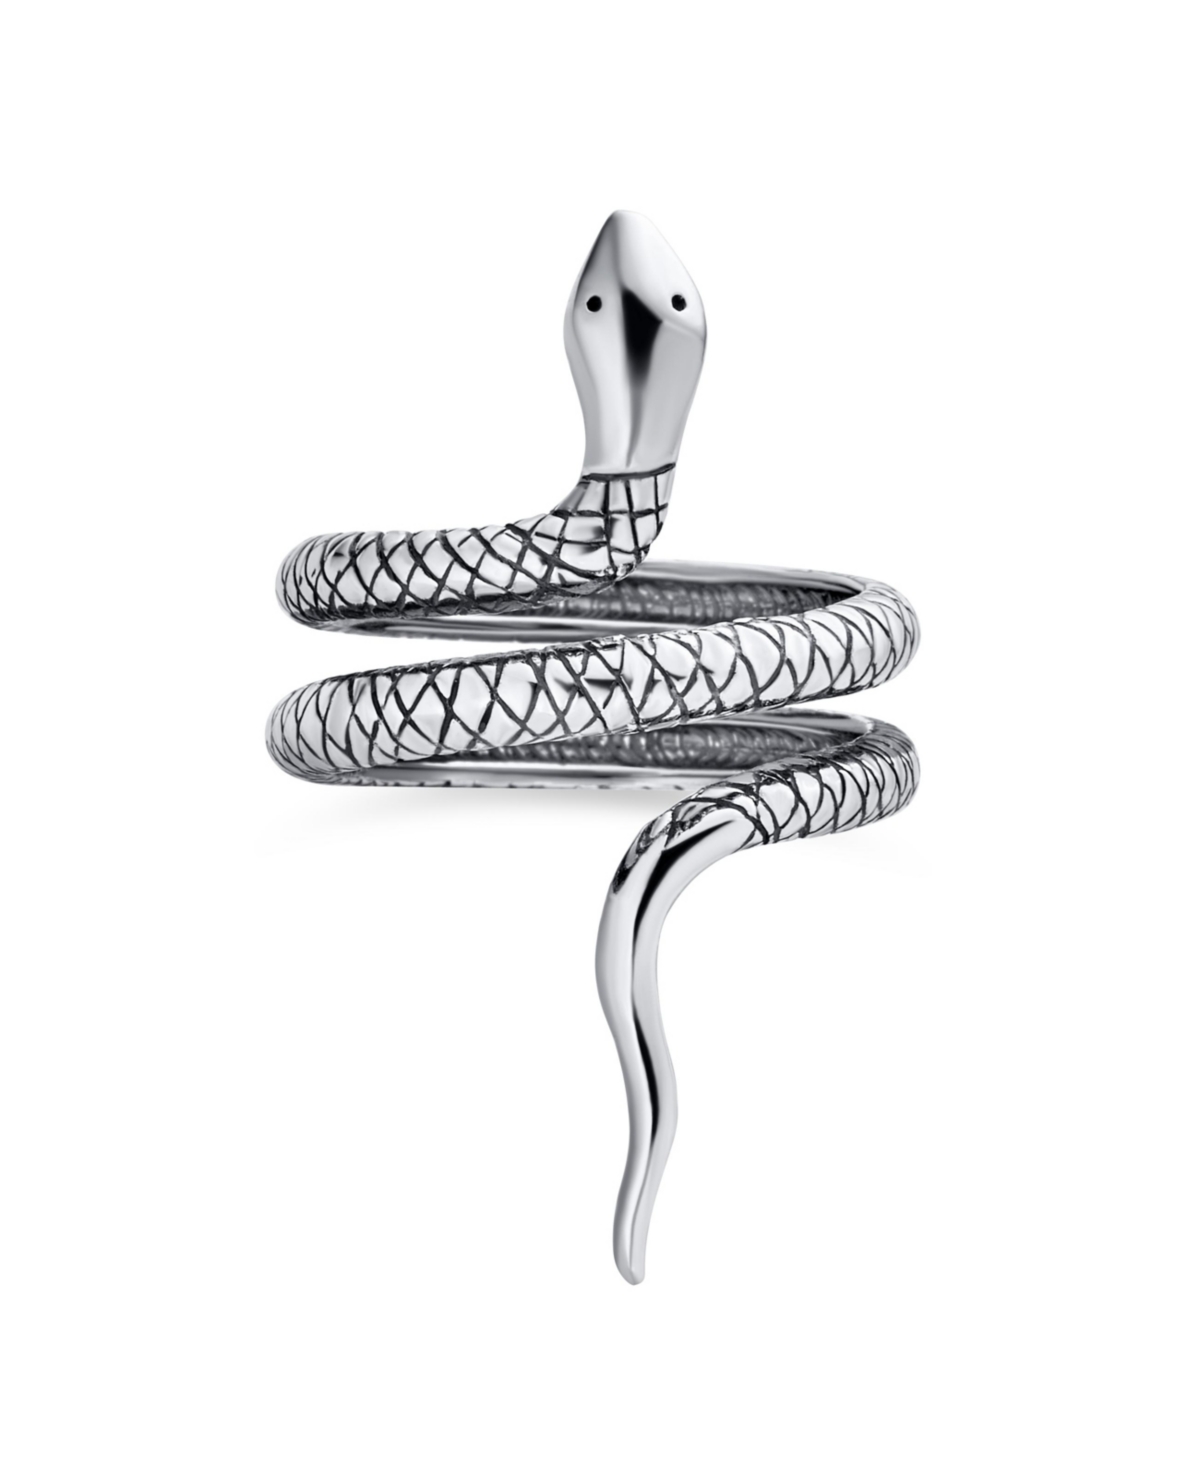 Boho Fashion Statement Garden Animal Pet Reptile Wrap Coil Serpent Snake Ring Band Women Oxidized .925 Sterling Silver - Black